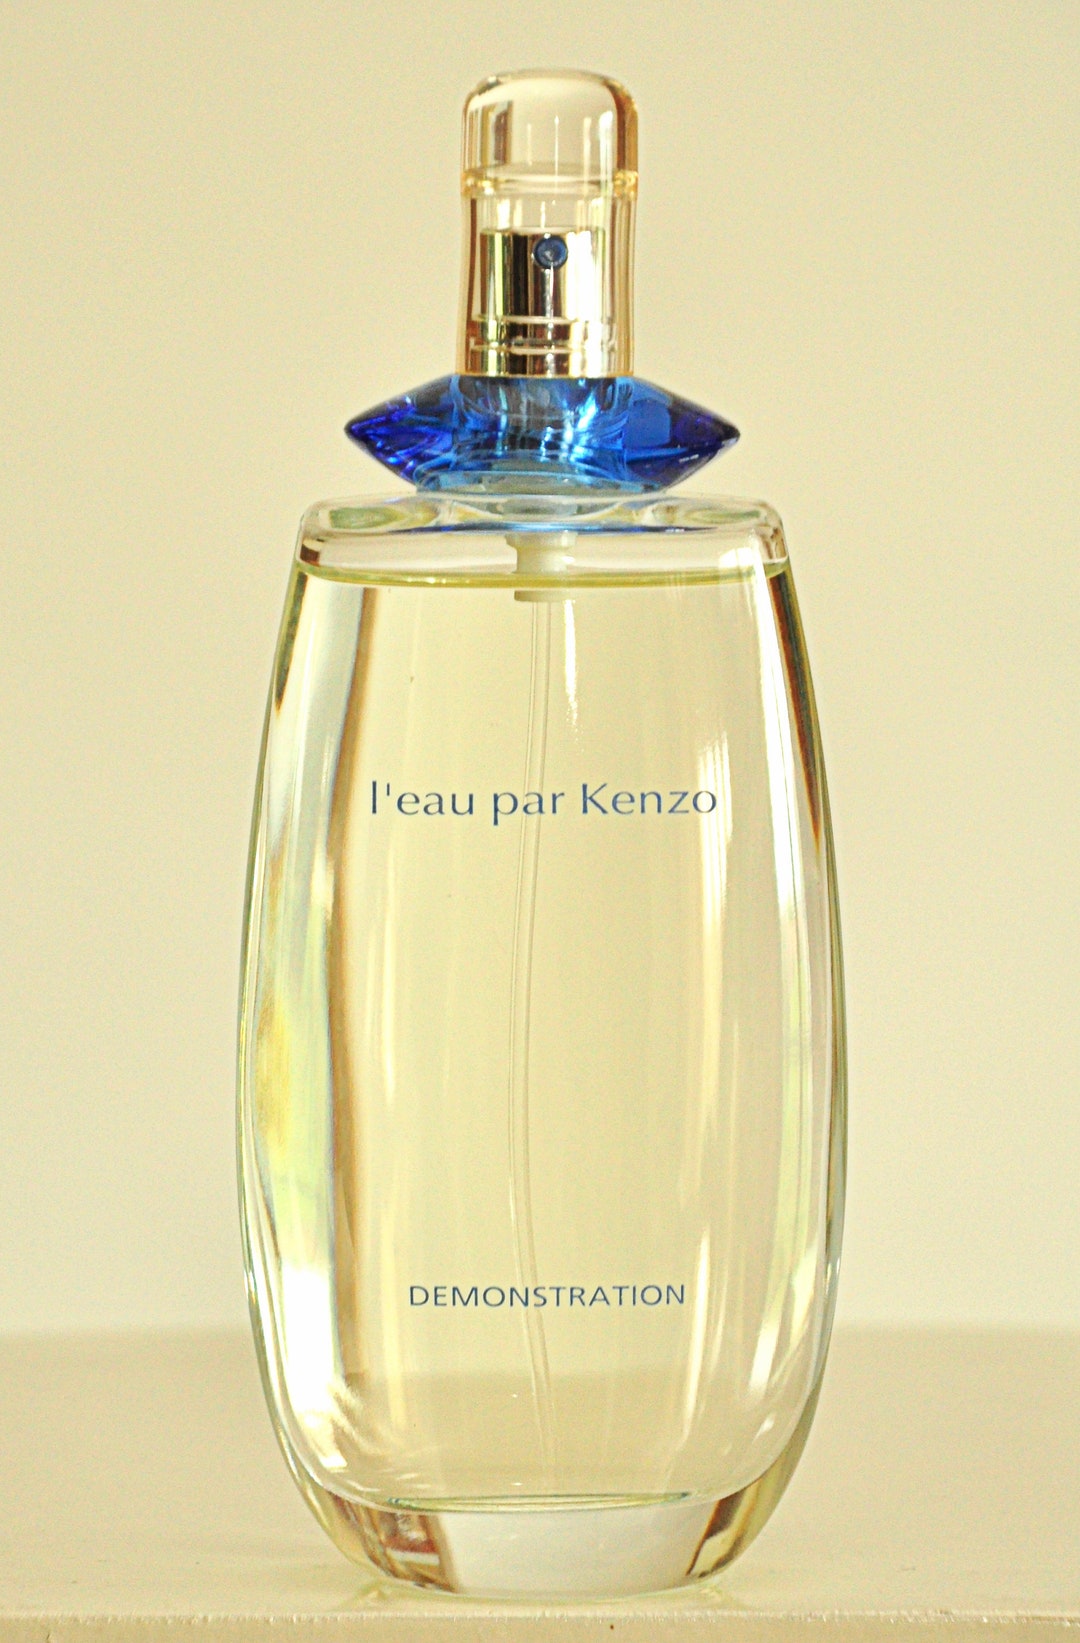  Kenzo Jungle L Elephant By Kenzo For Women. Eau De Parfum  Spray 3.4 Oz. : Beauty & Personal Care